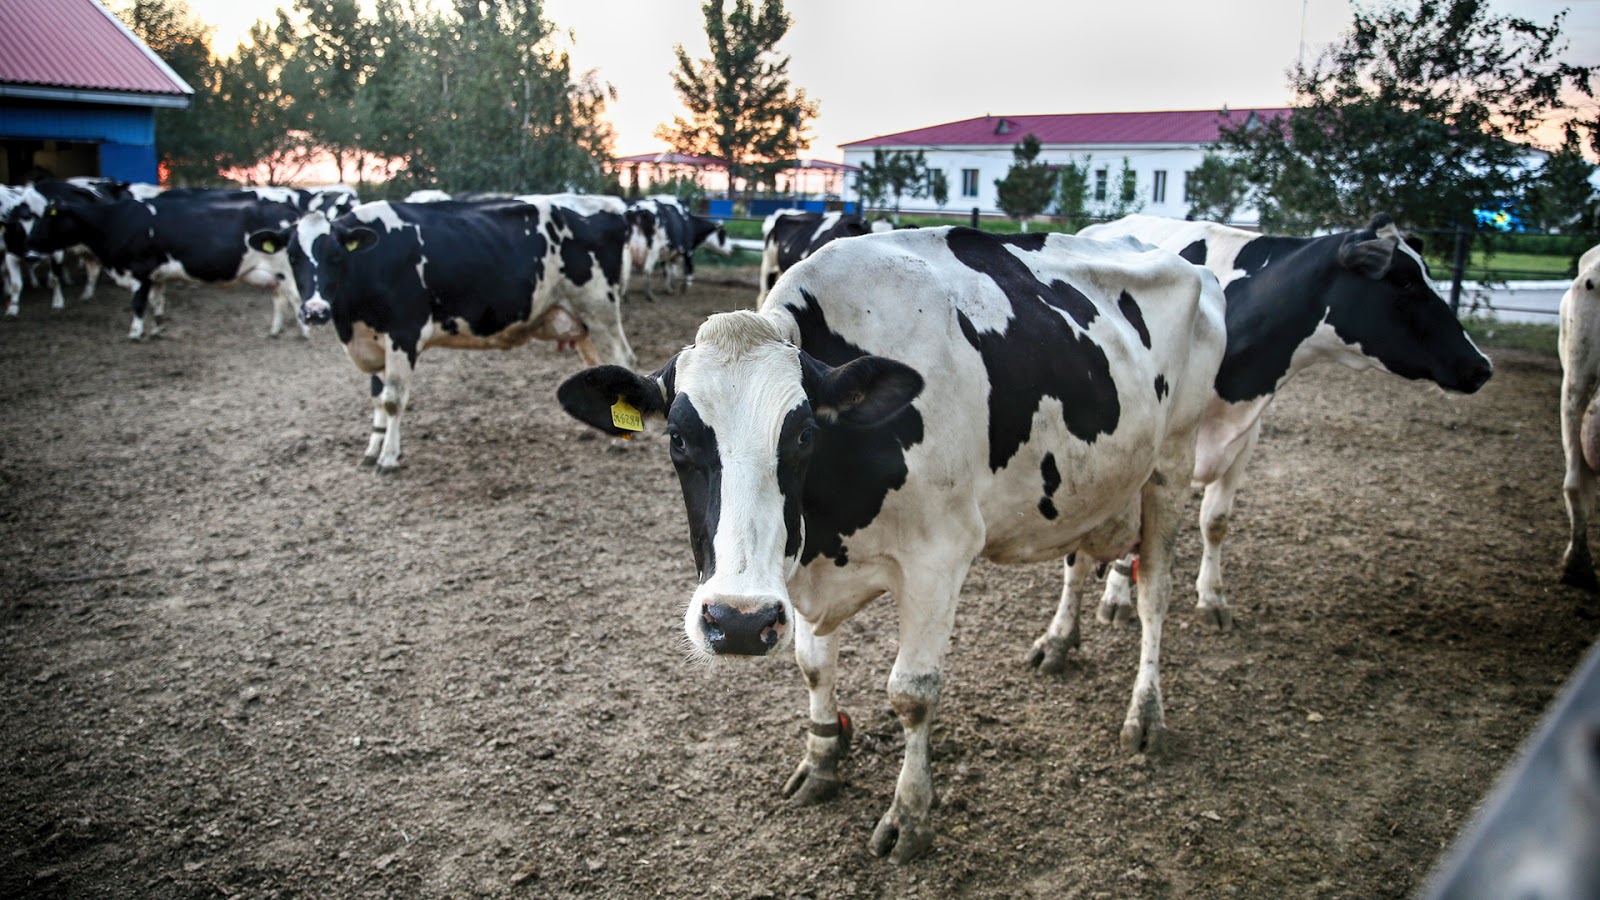 Livestock development: 840 new farms created in cattle breeding in 2019